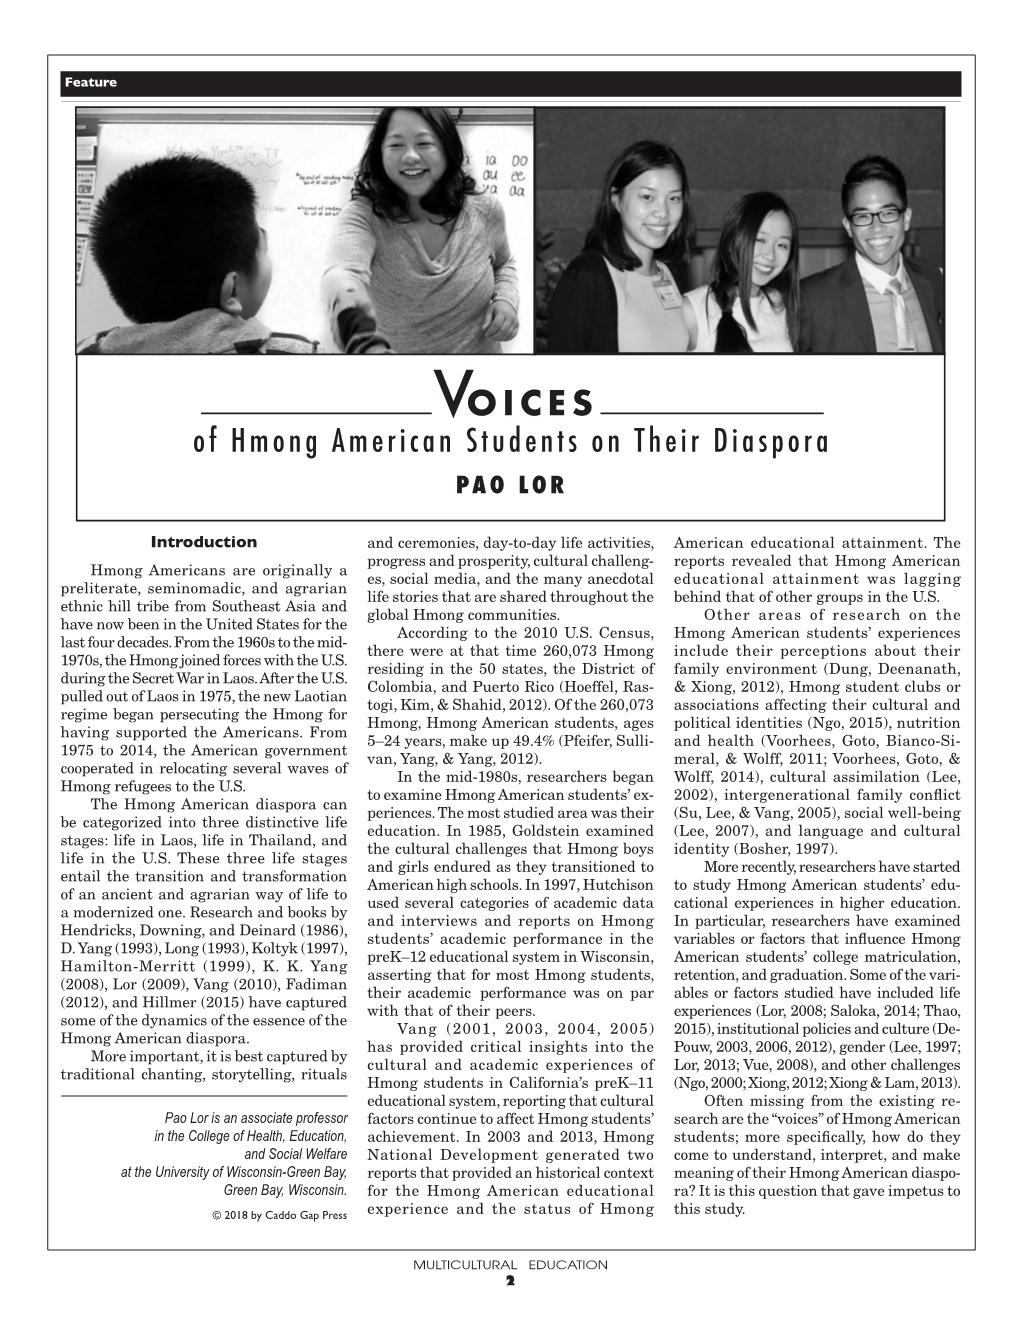 Of Hmong American Students on Their Diaspora PAO LOR